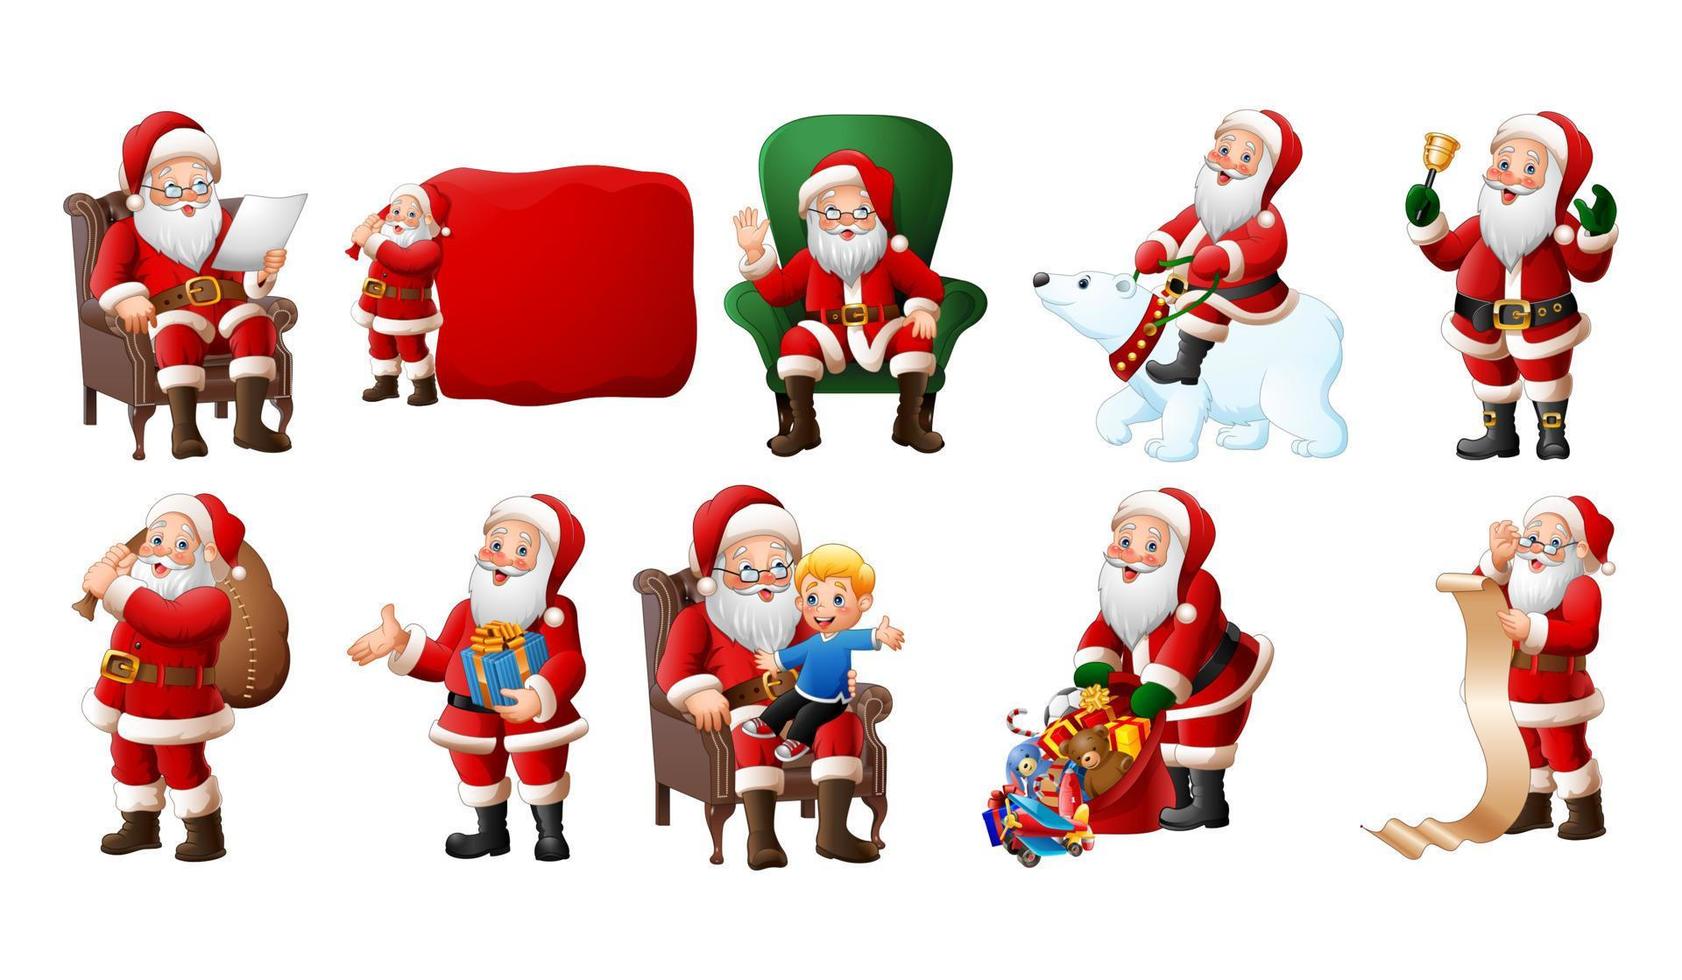 Cartoon Santa Claus illustration collections vector